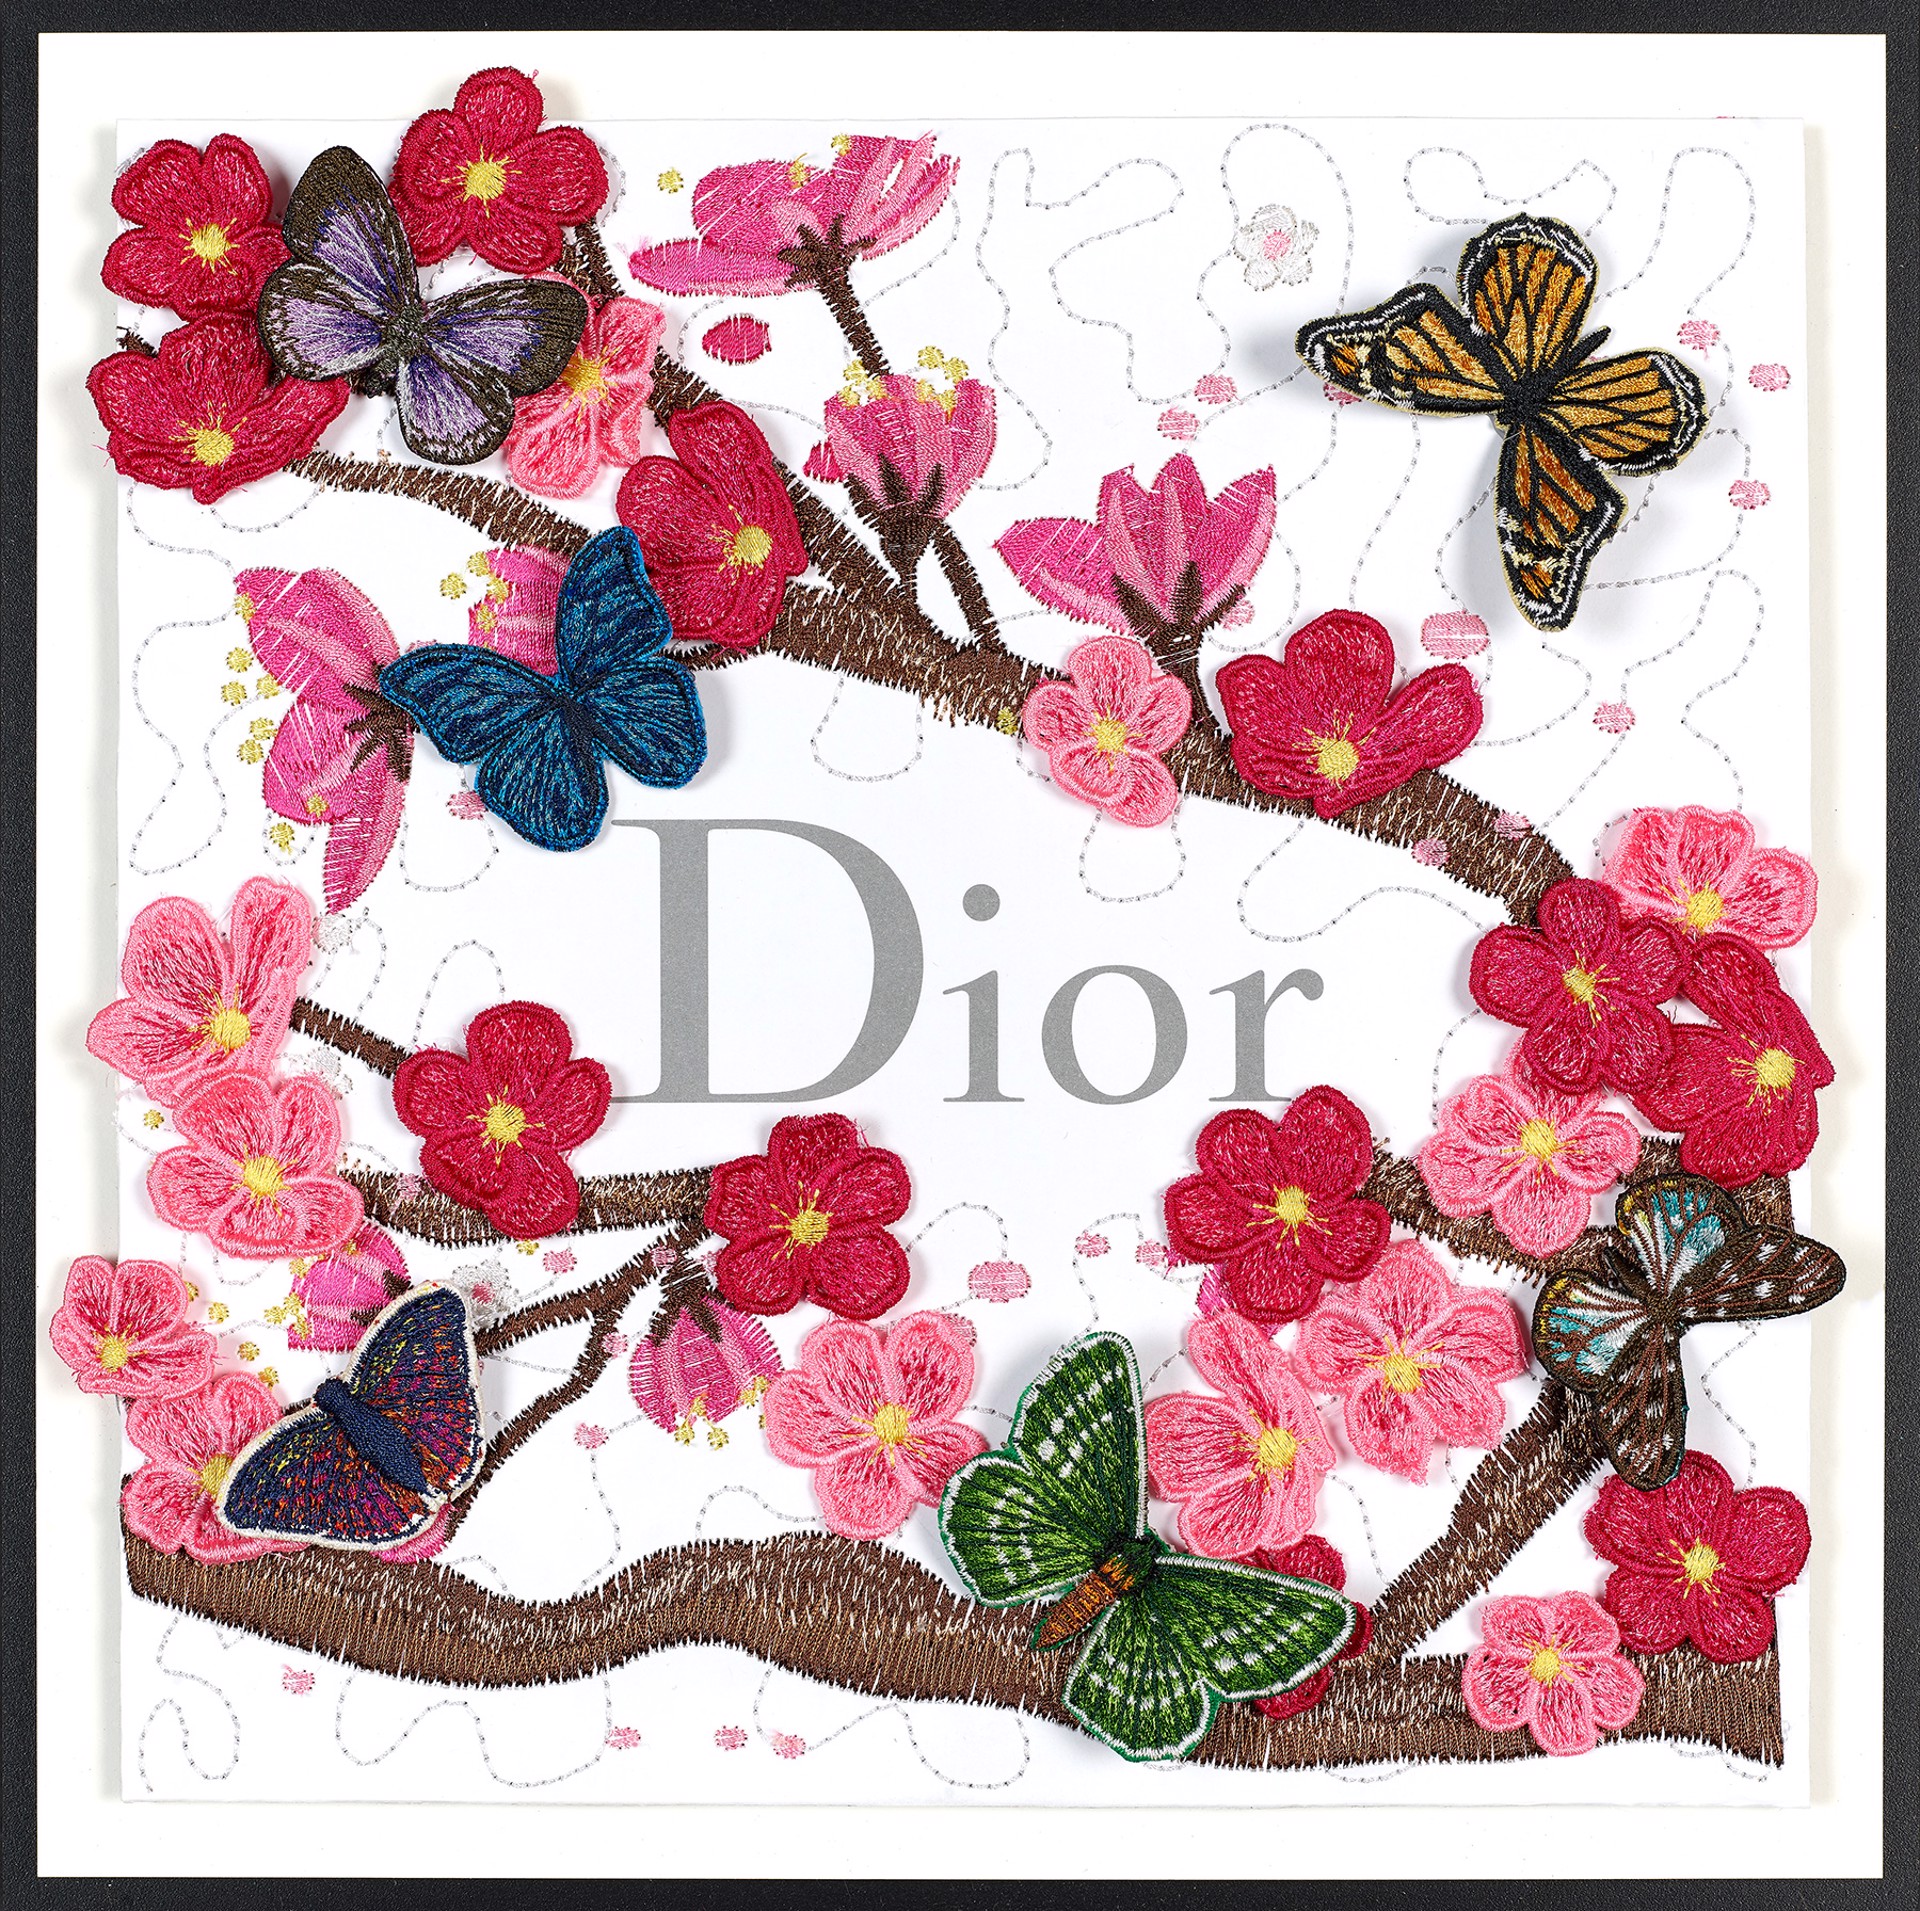 Dior Cherry Blossom by Stephen Wilson